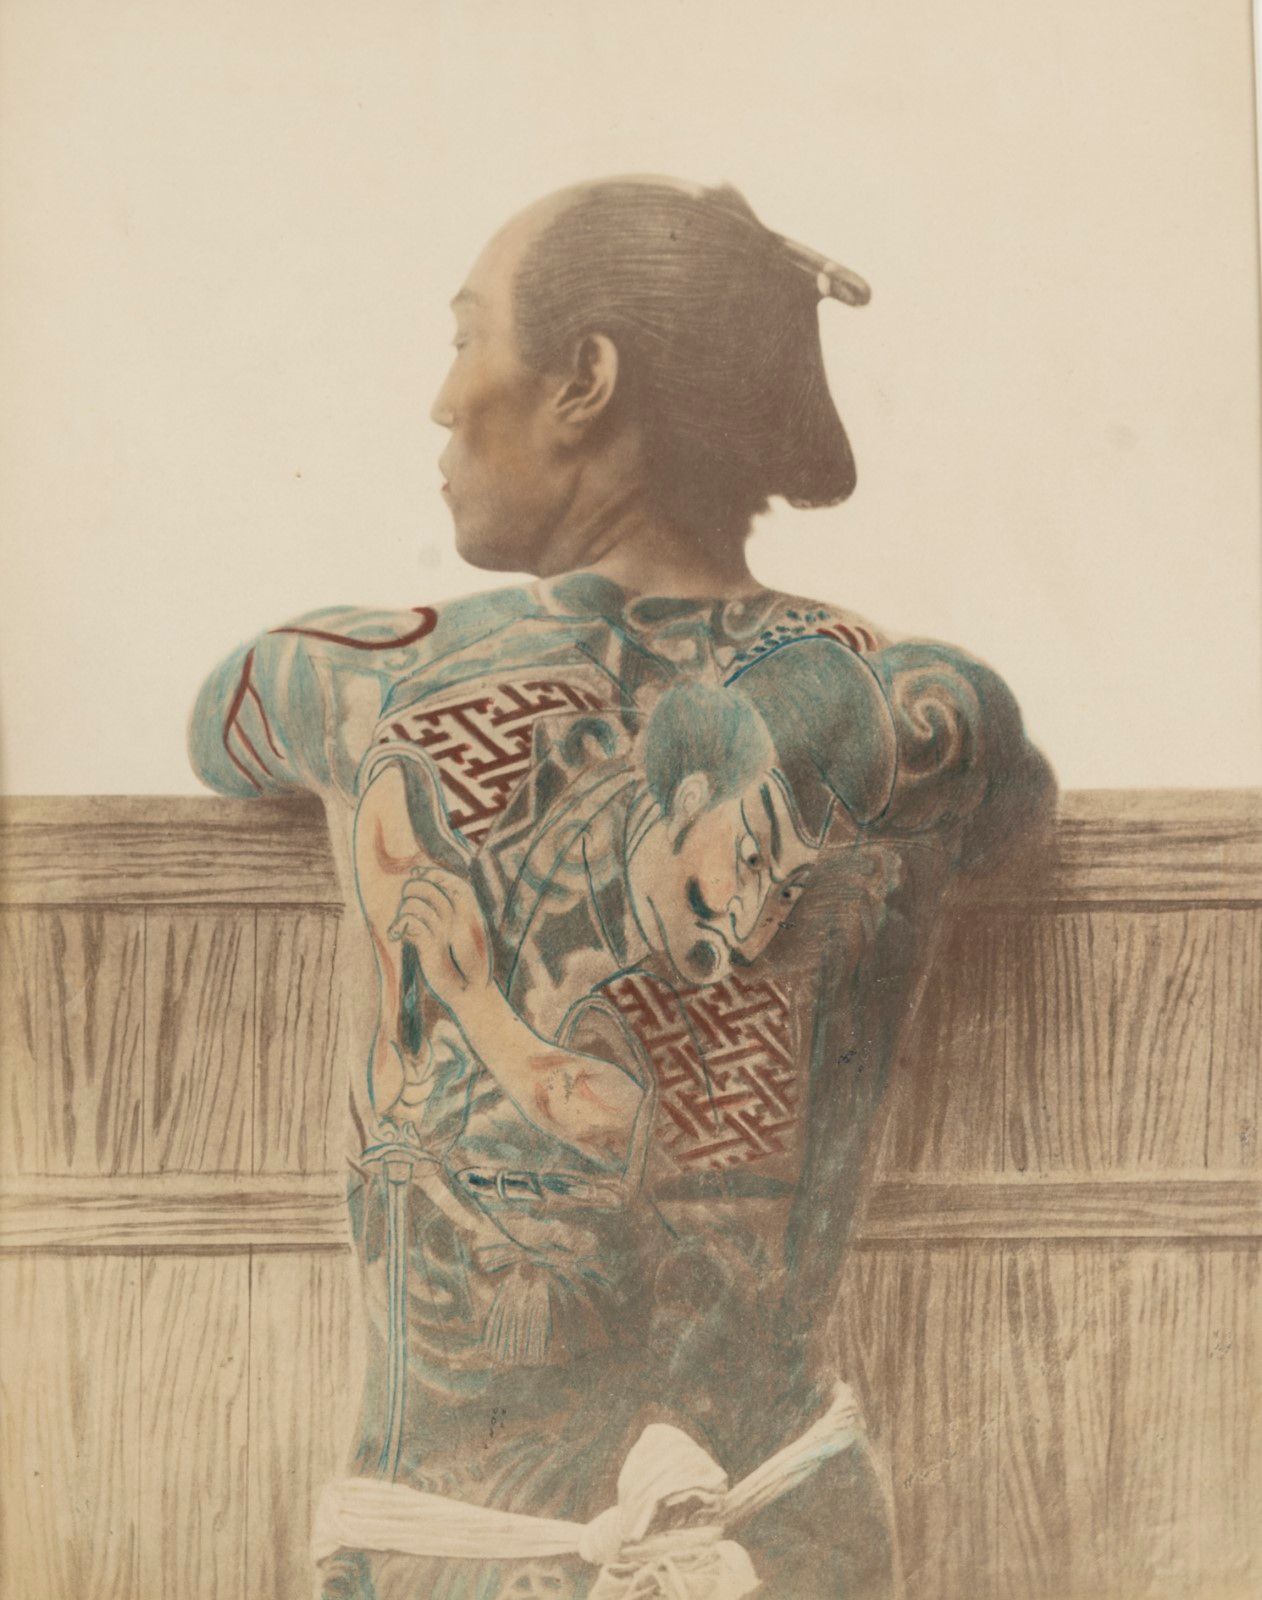 Kusakabe KIMBEI (1841-1934) 
草壁金兵 (1841-1934)




日本刺青




水彩蛋白纸印刷品，约1870-1880年
&hellip;